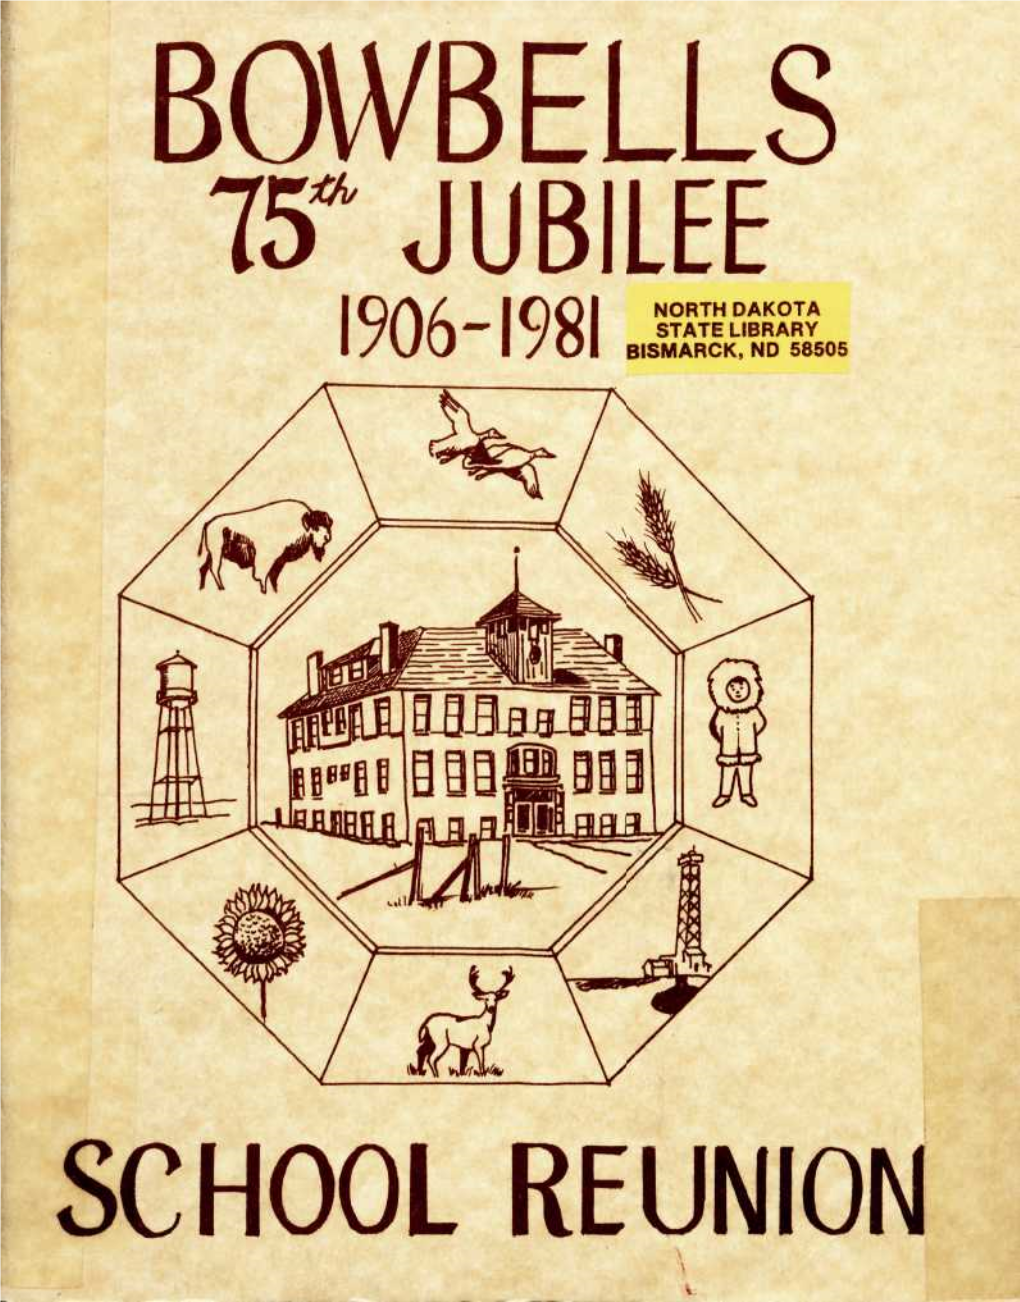 Bowbells 75" Jubilee North Dakota State Library 1906-1981 Bismarck, Nd 58505